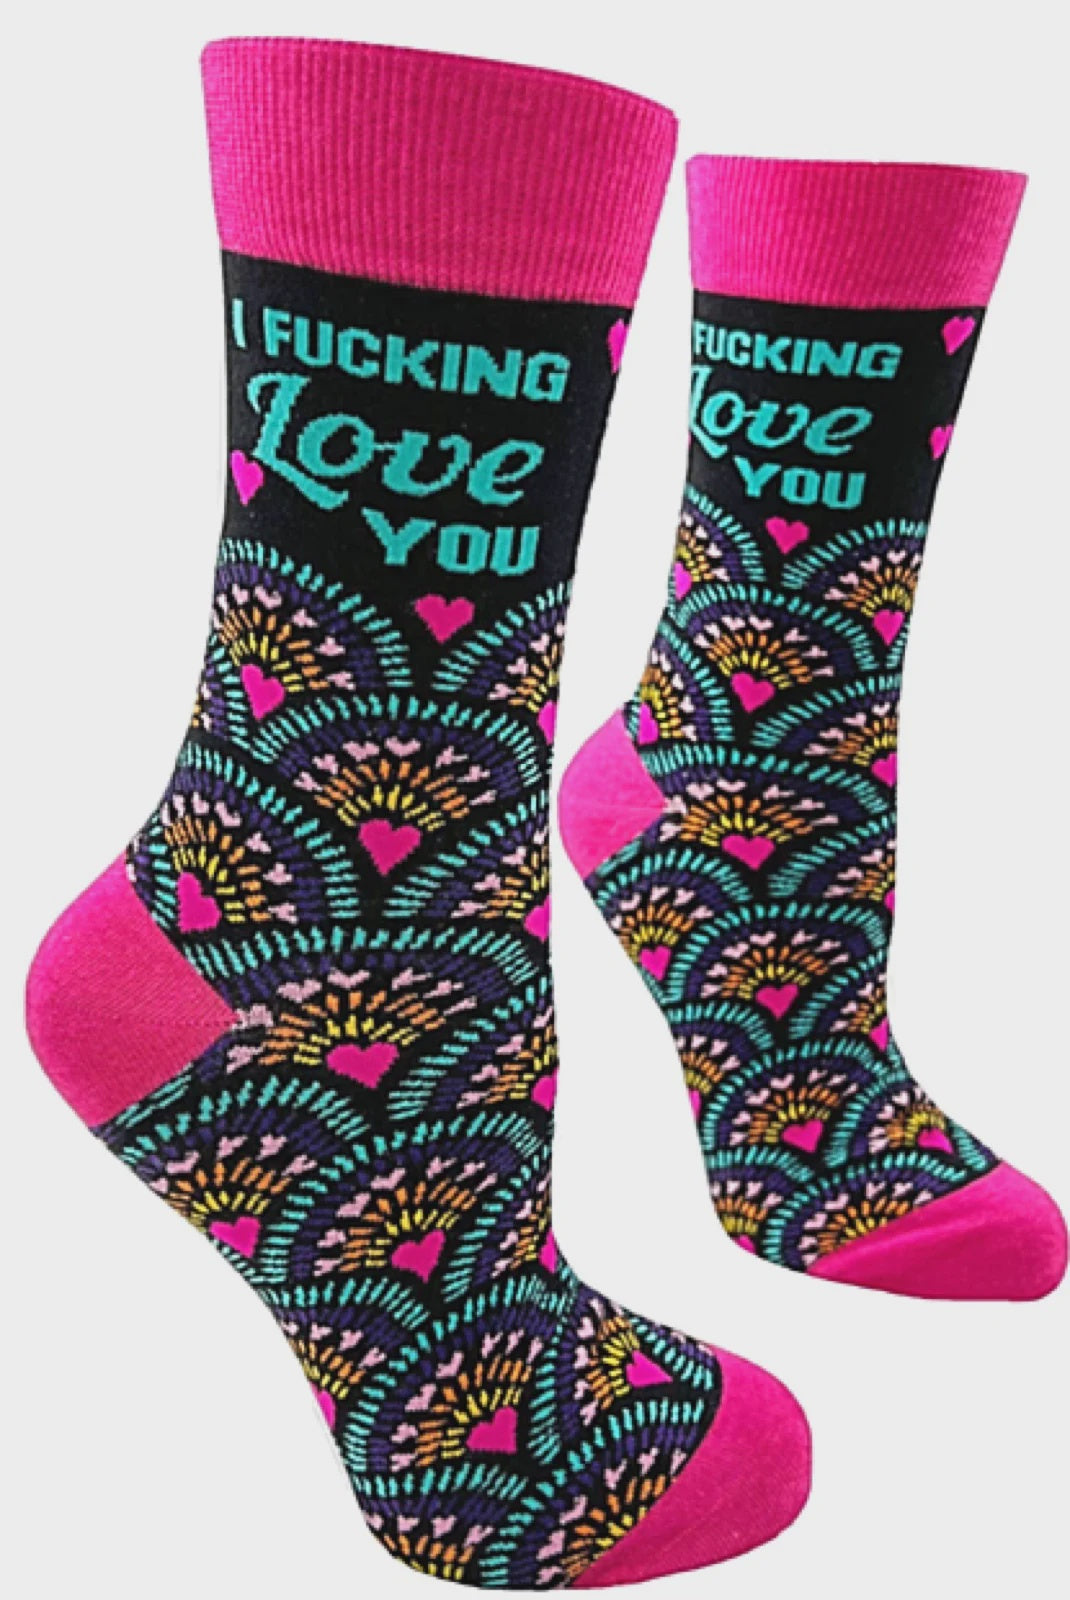 I Fucking Love You Ladies' Novelty Crew Socks